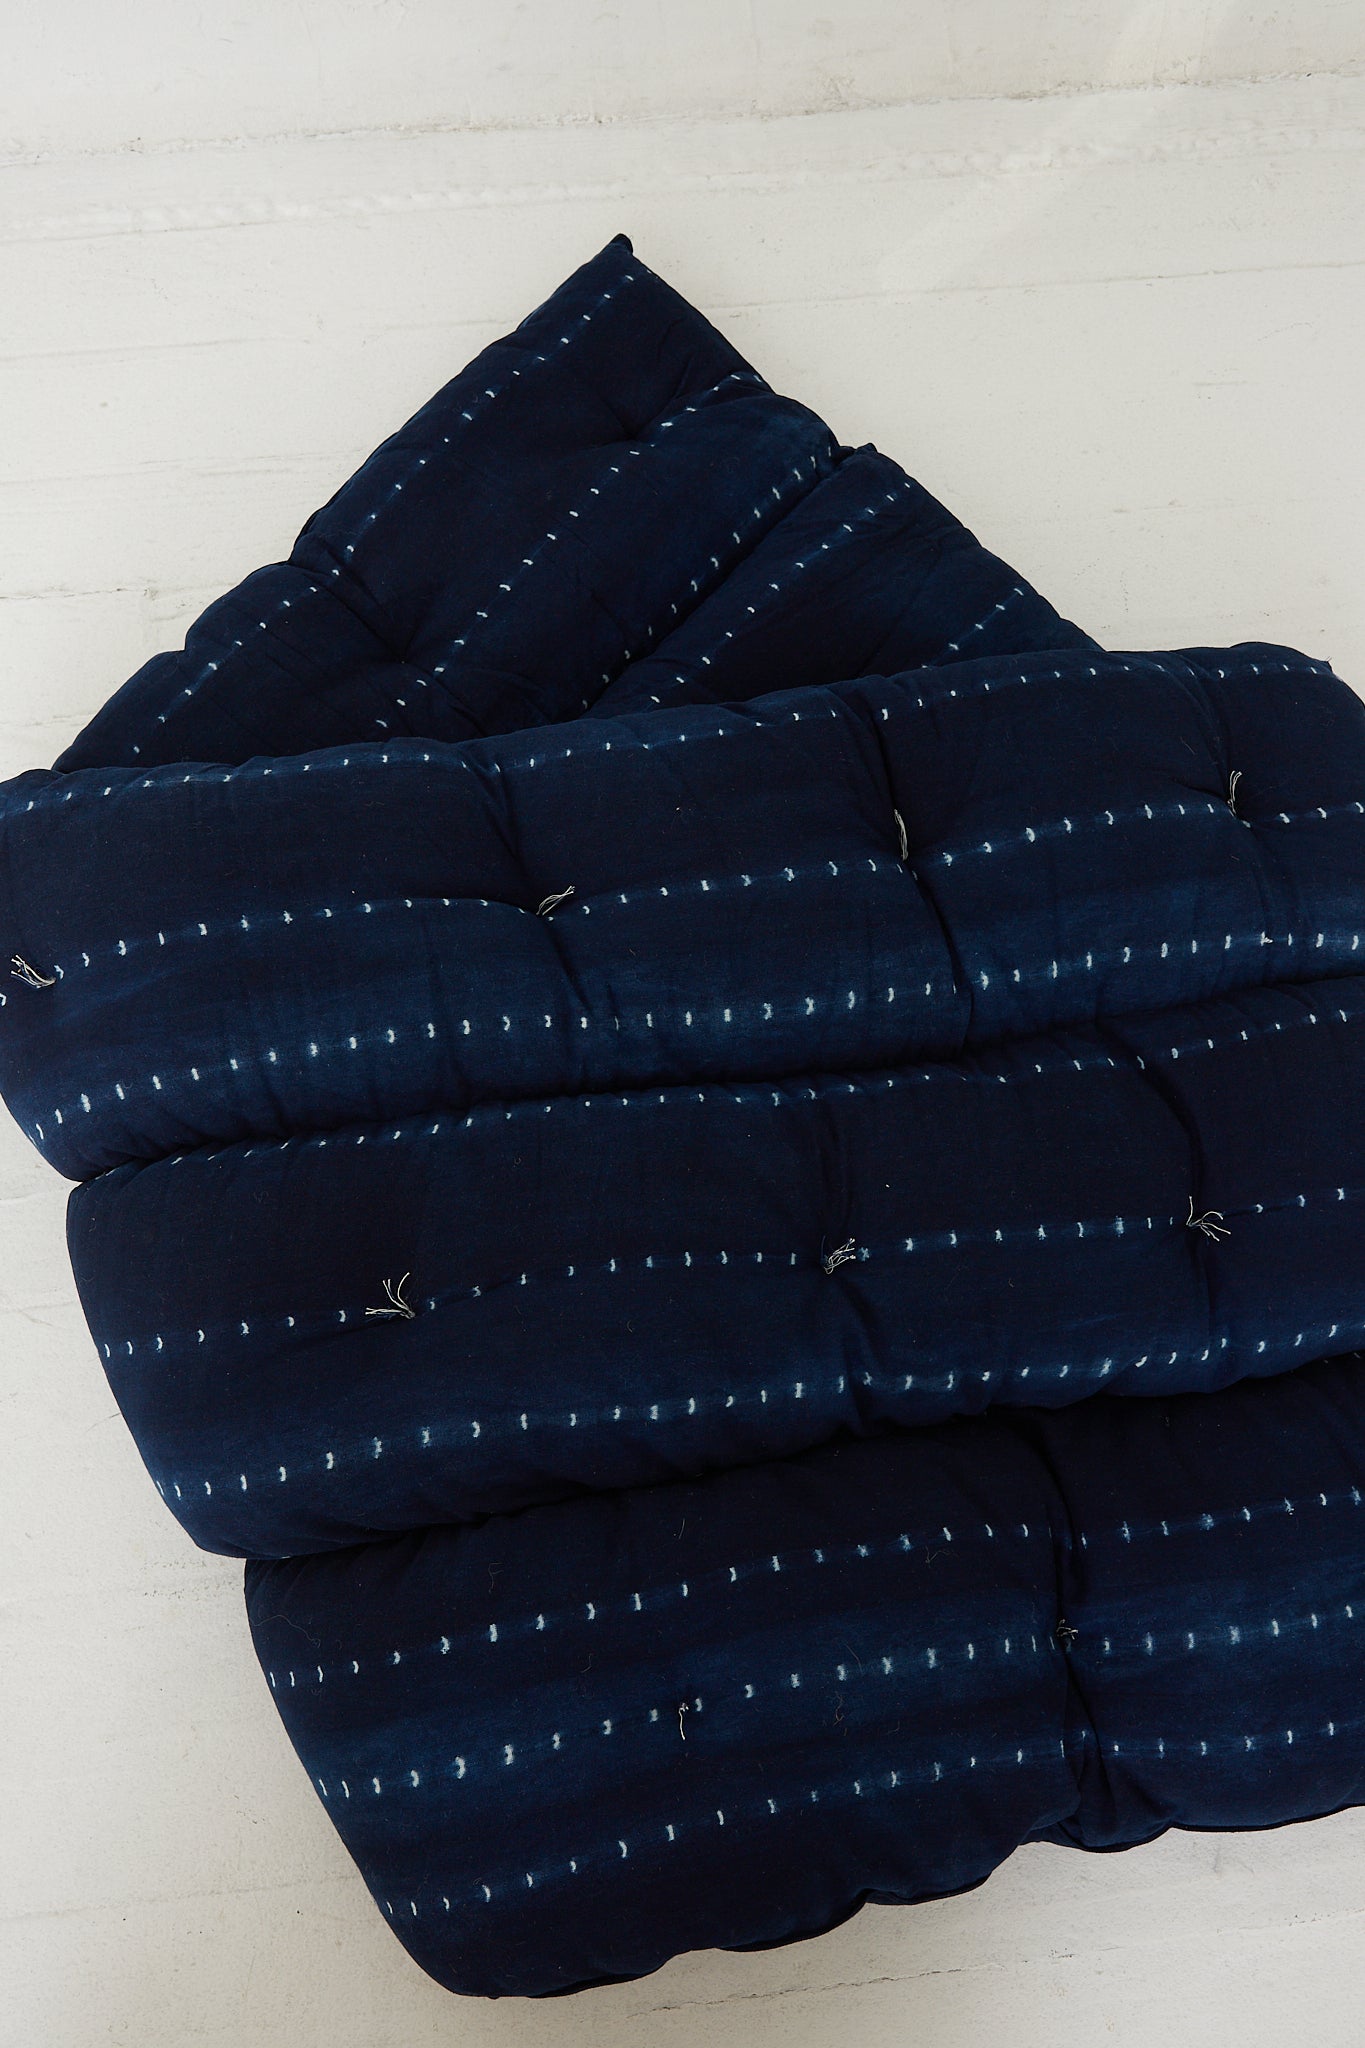 A Tufted Overlay Mattress in Dark Indigo Tie Dye by Tensira folded.